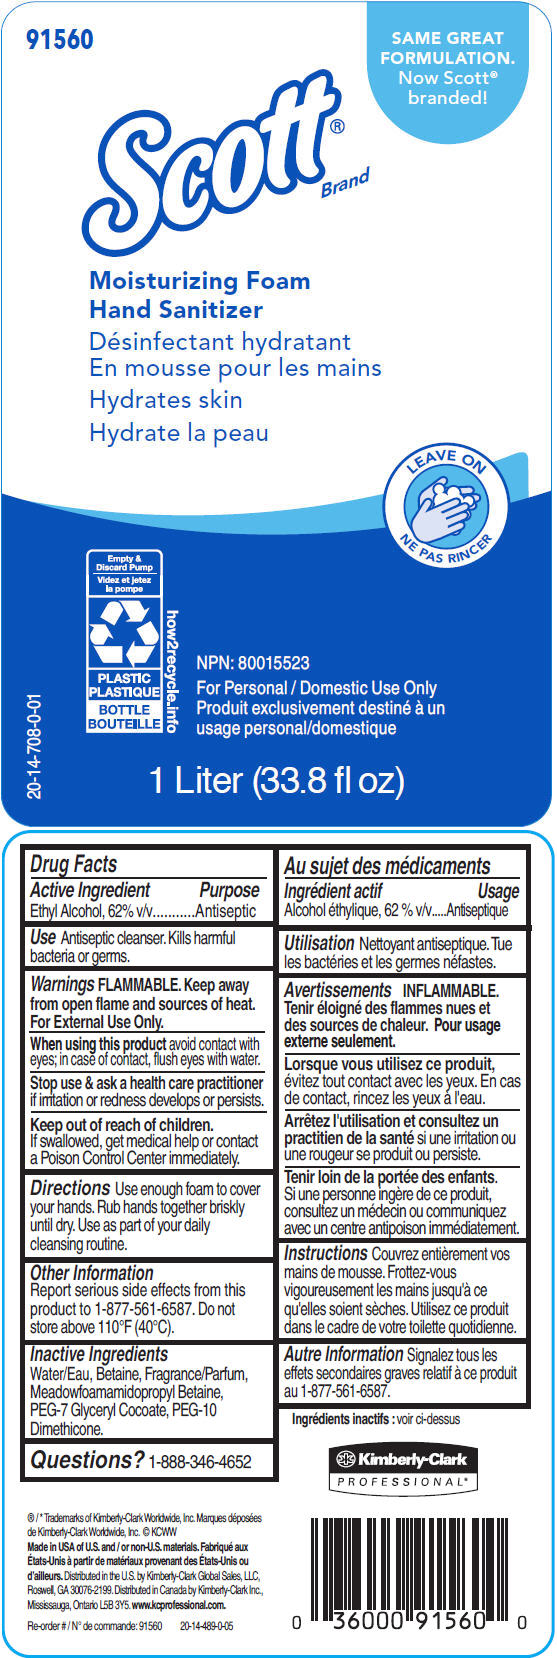 PRINCIPAL DISPLAY PANEL - 33.8 fl oz Bottle Label